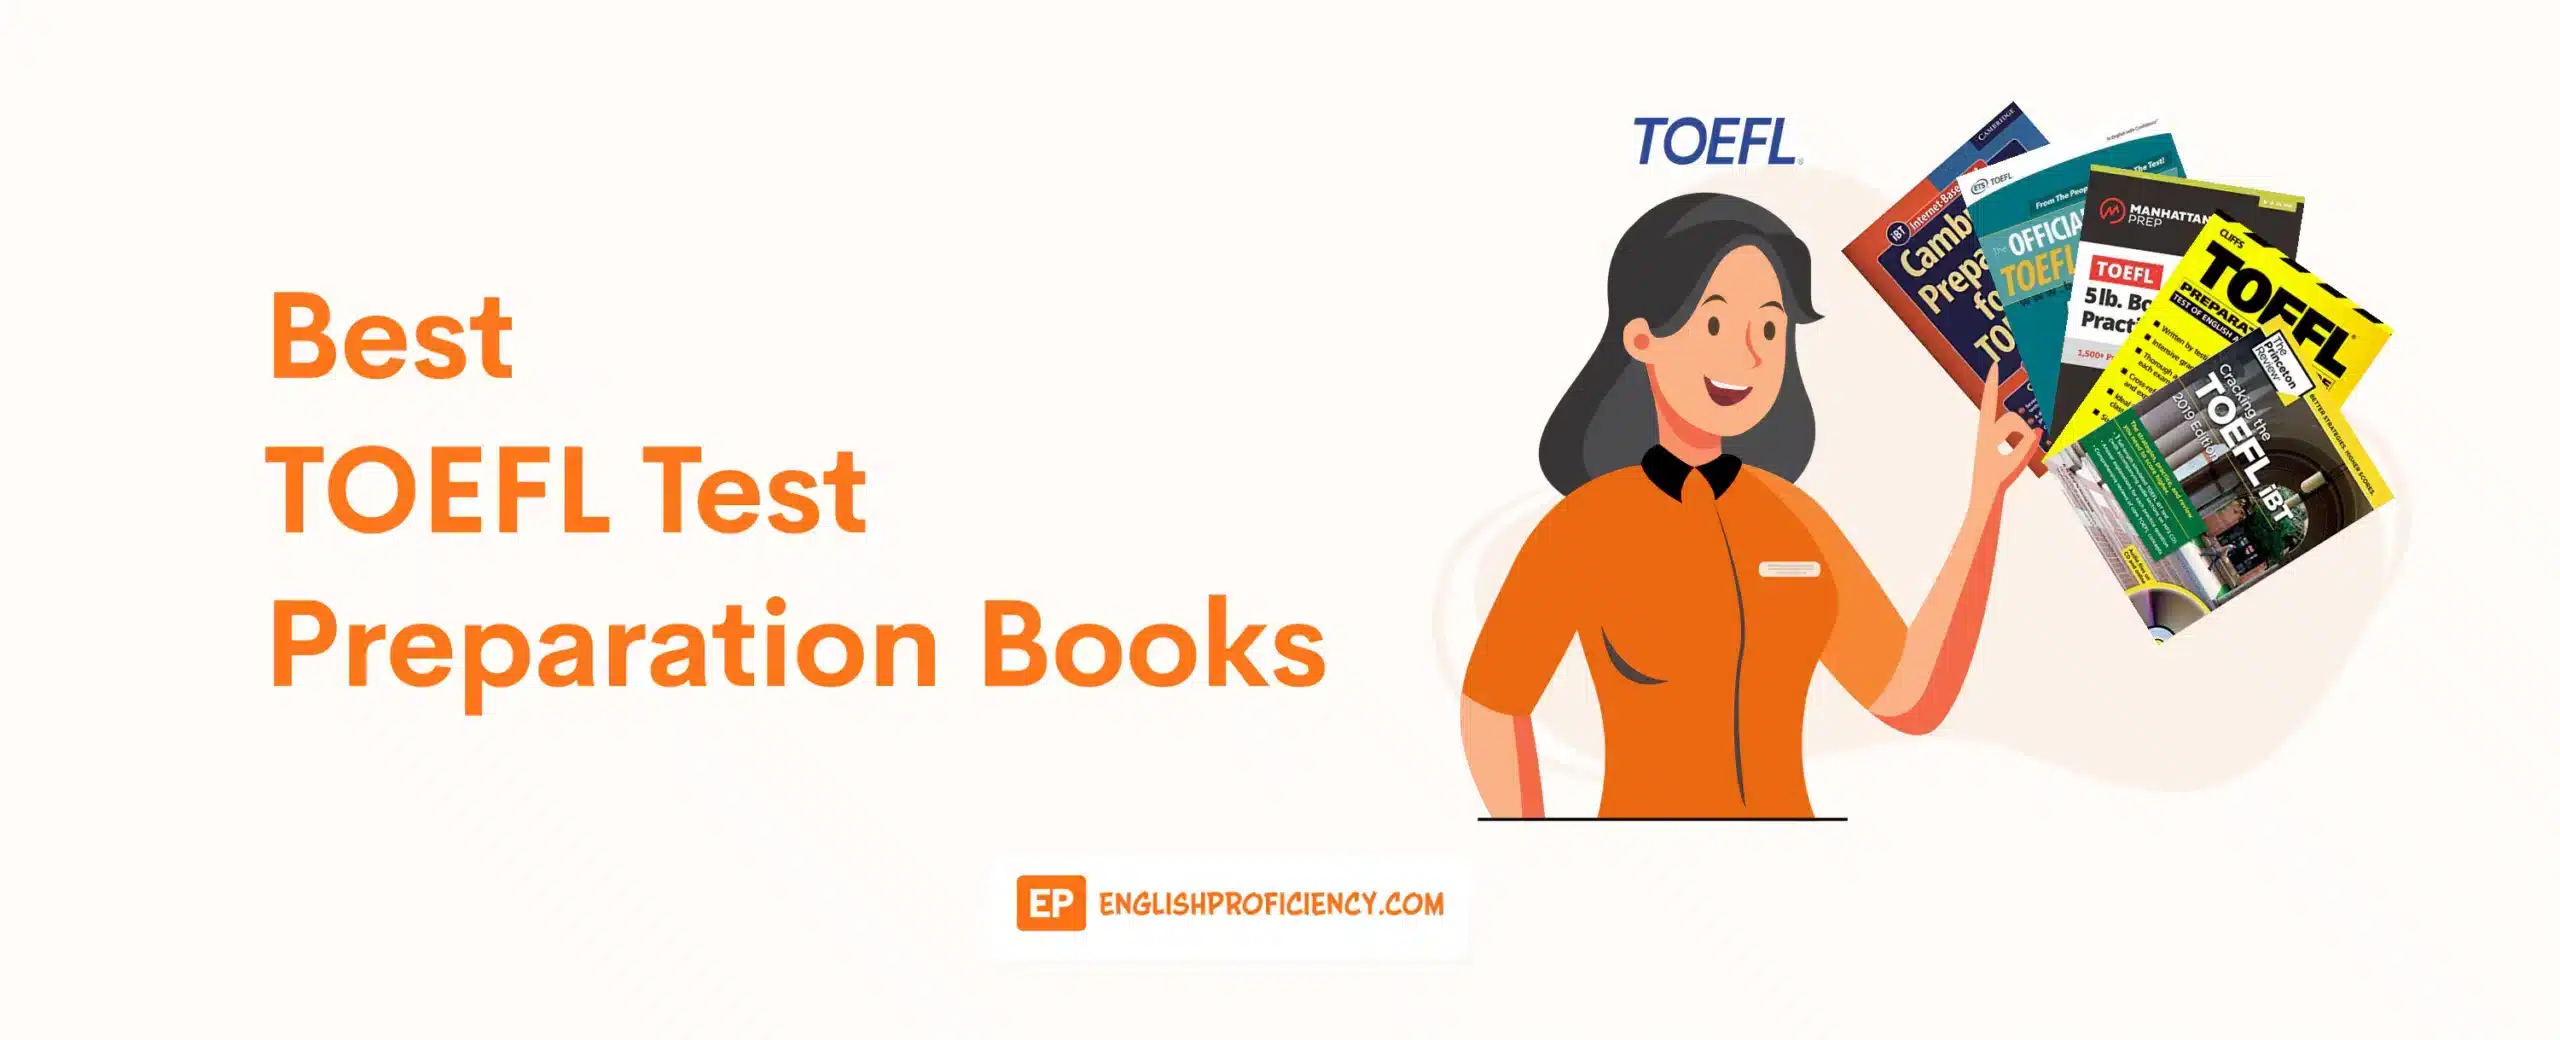 Best TOEFL Test Preparation Books